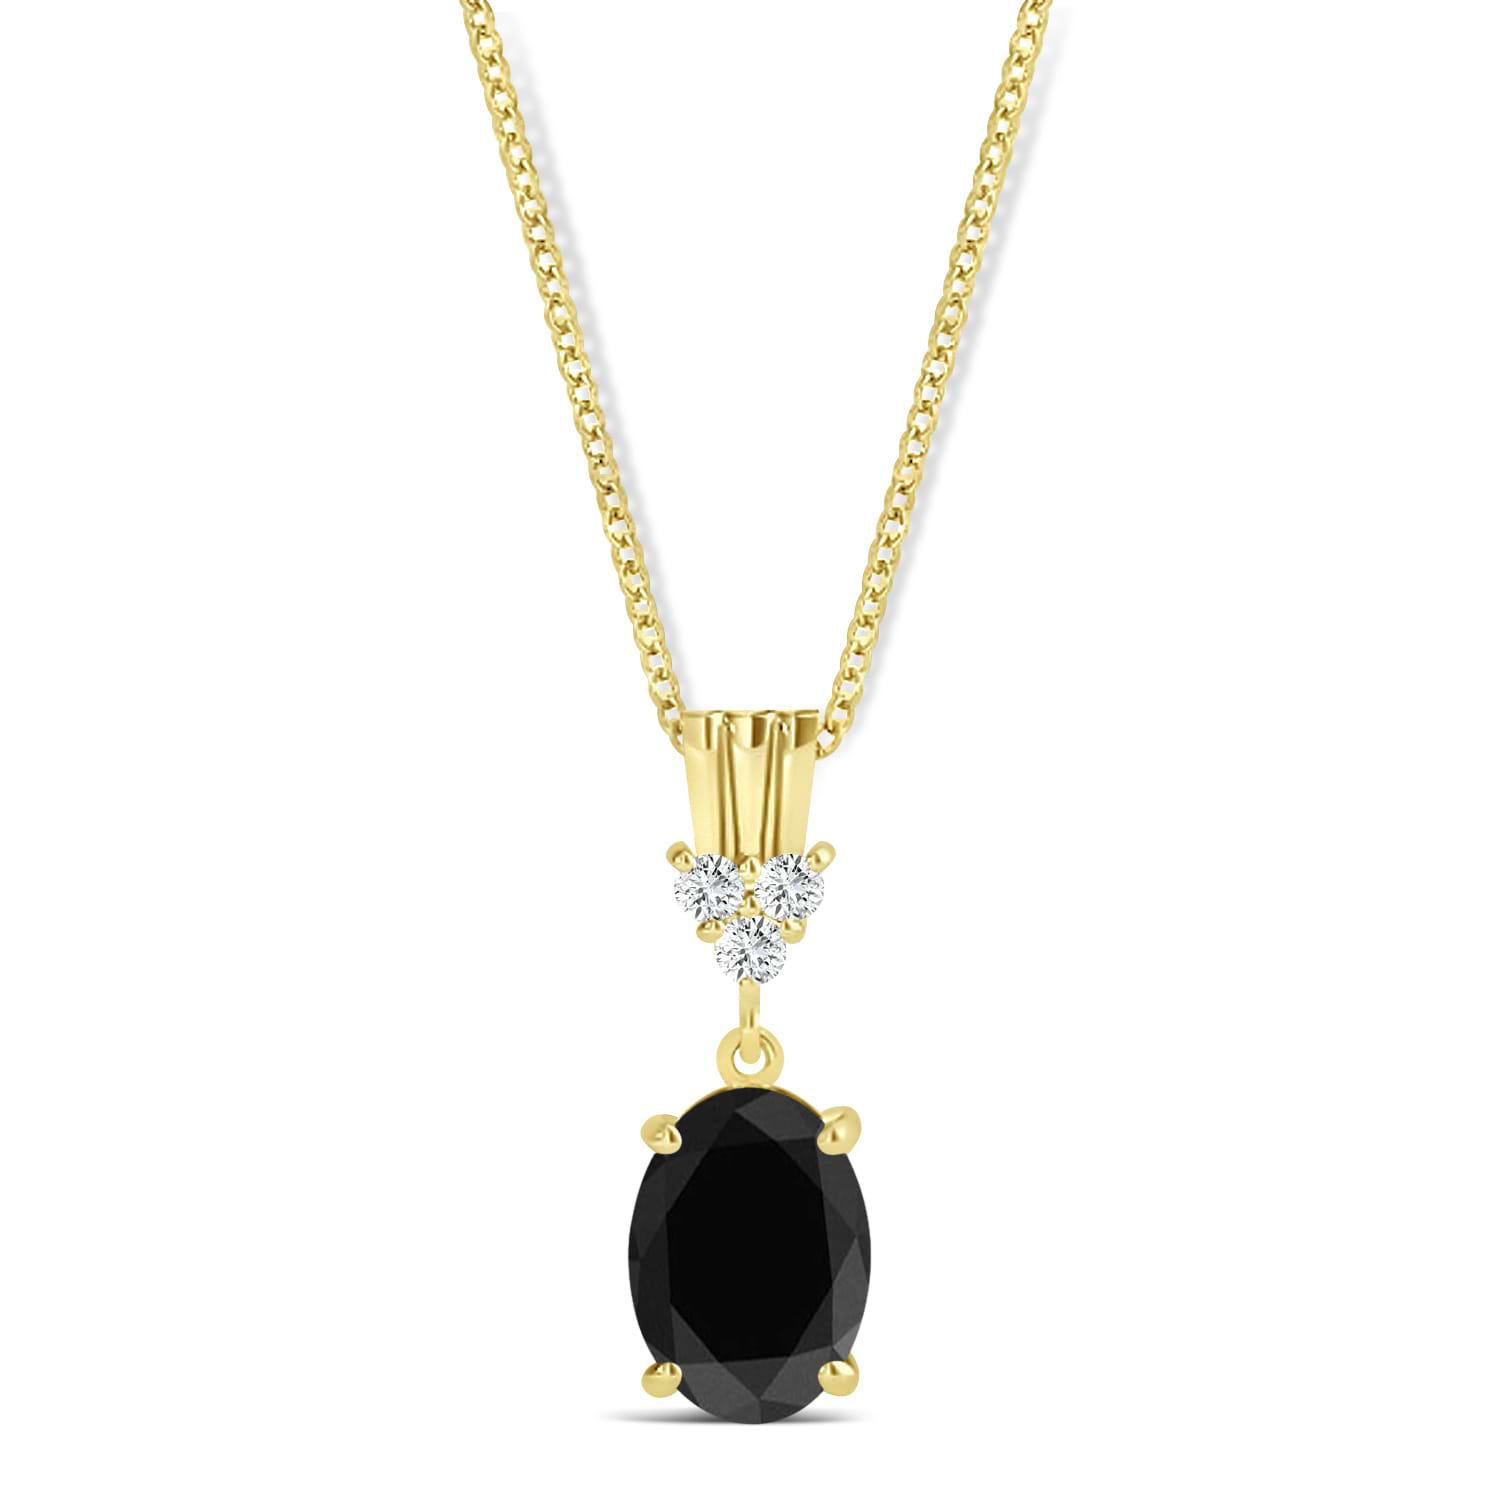 Oval Shape Black Diamond & Diamond Pendant Necklace 14k Yellow Gold (0.80ct)